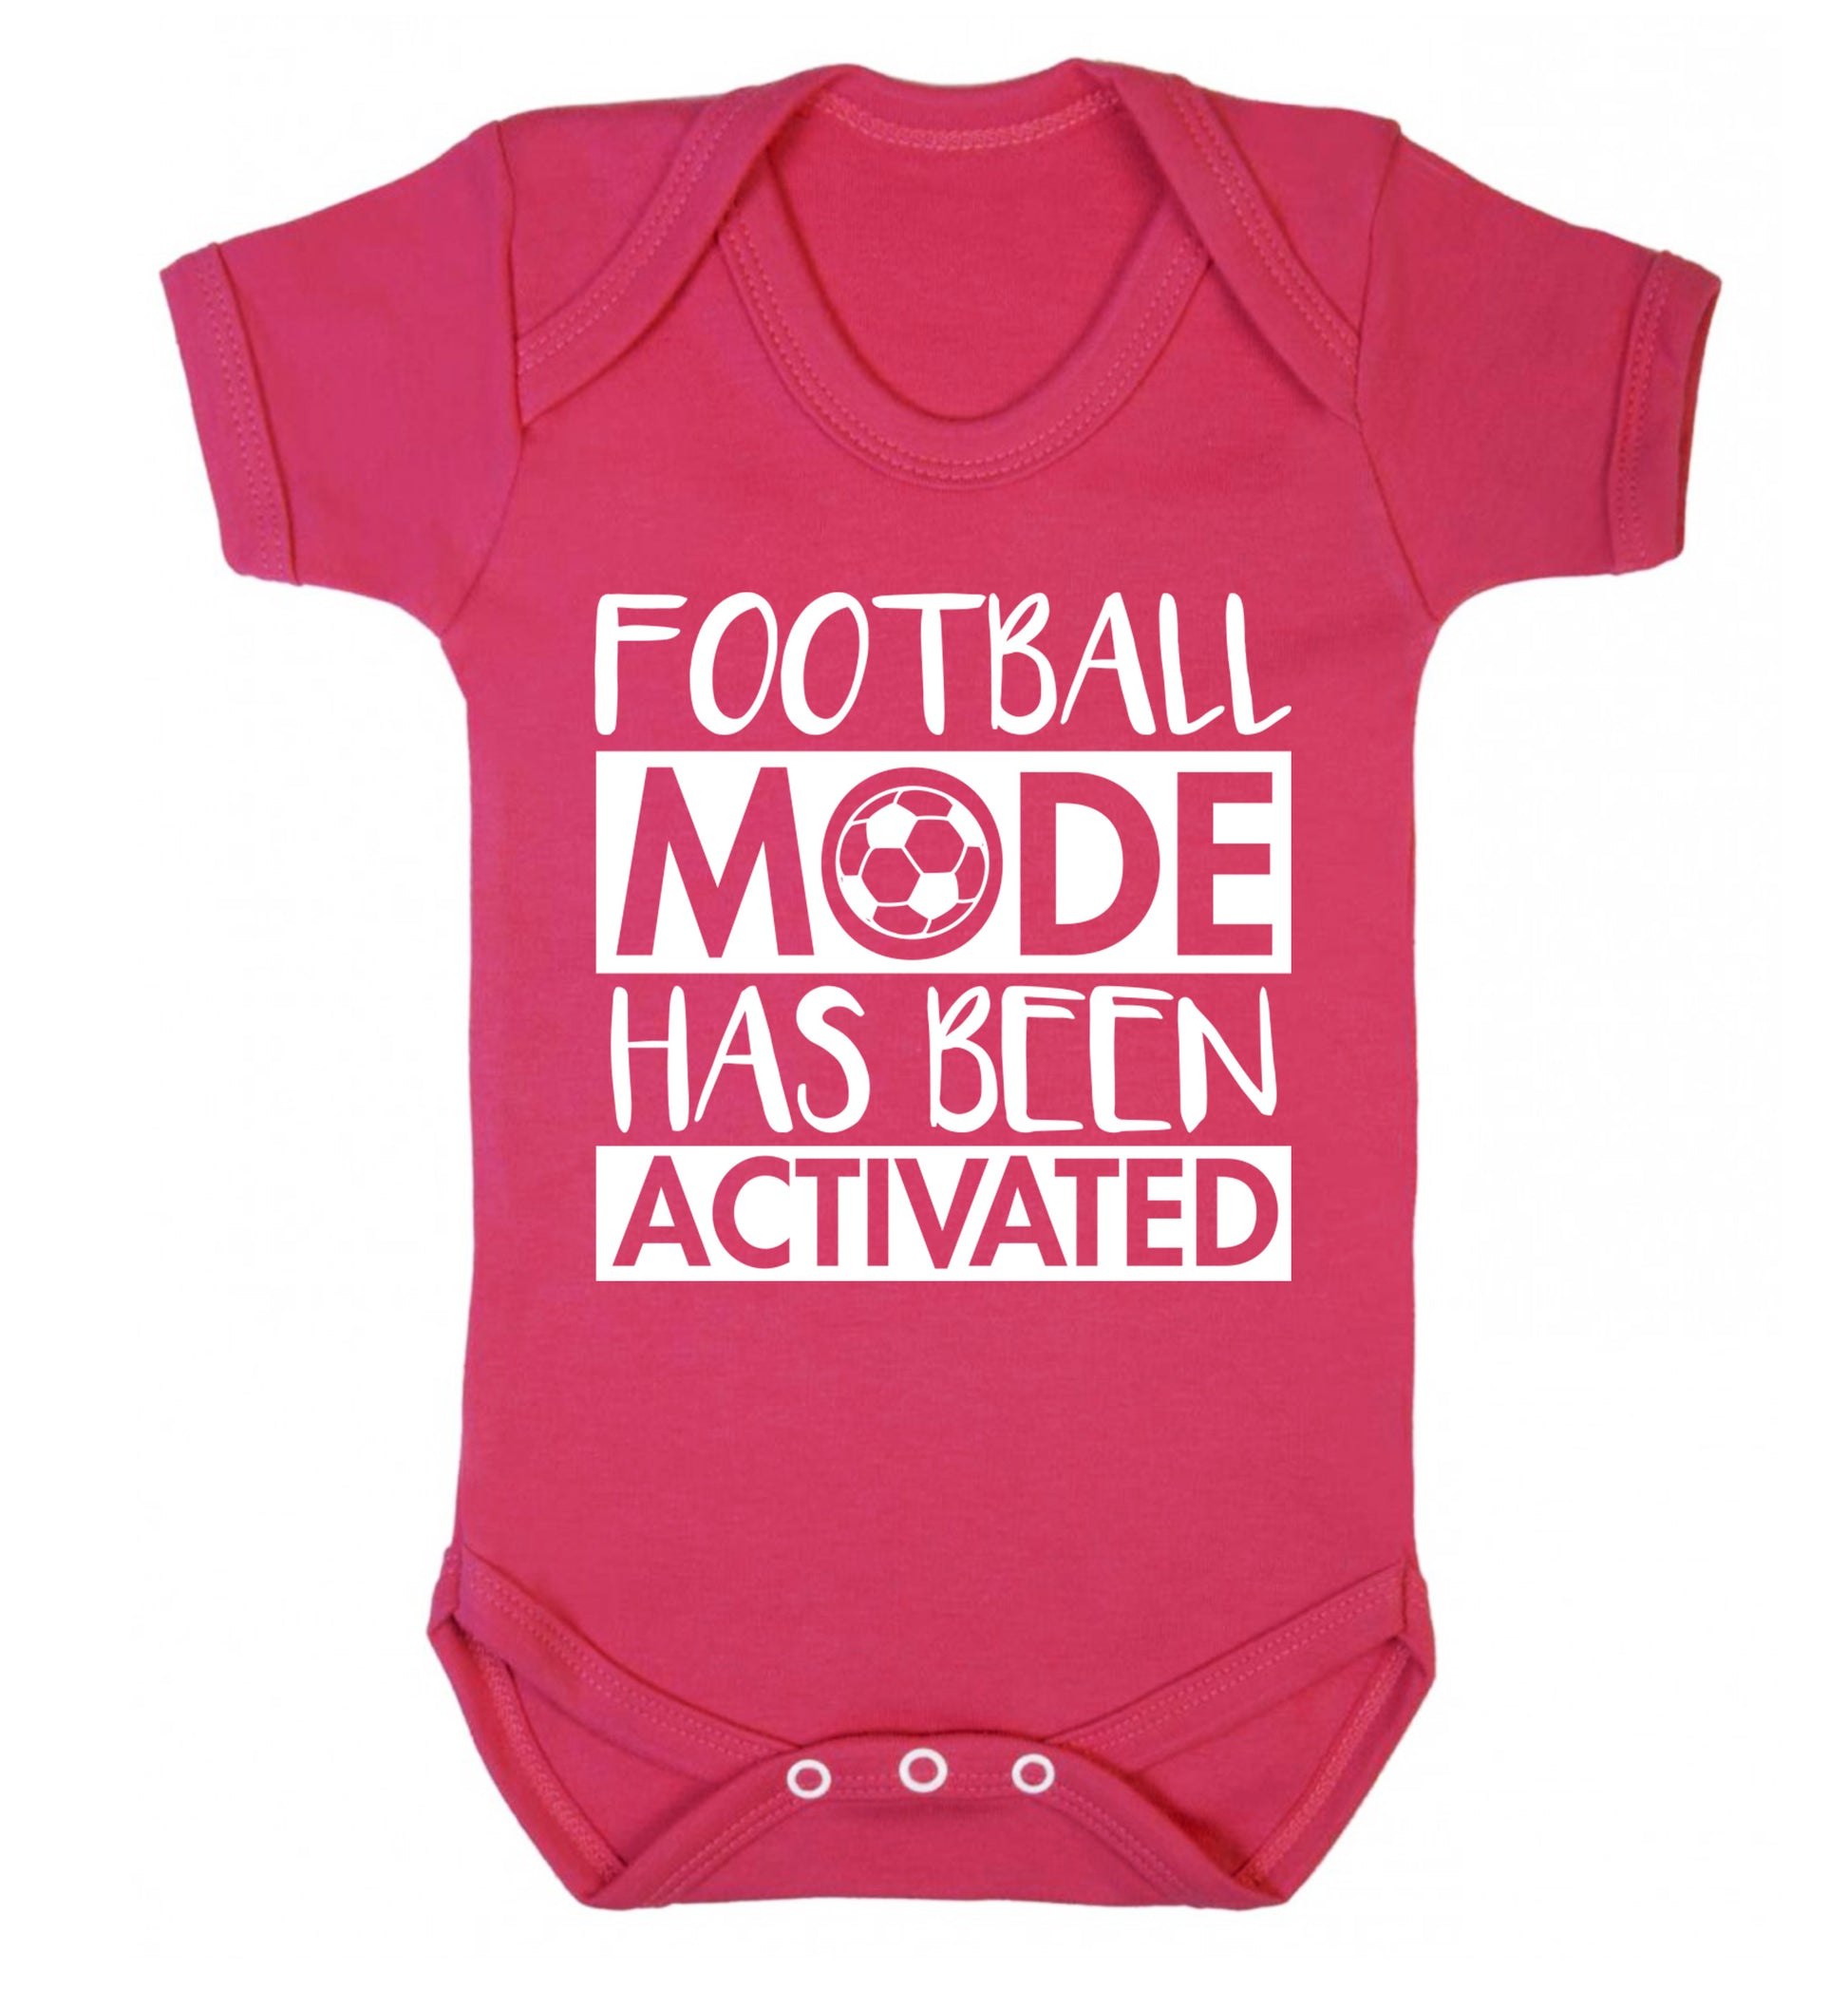 Football mode has been activated Baby Vest dark pink 18-24 months